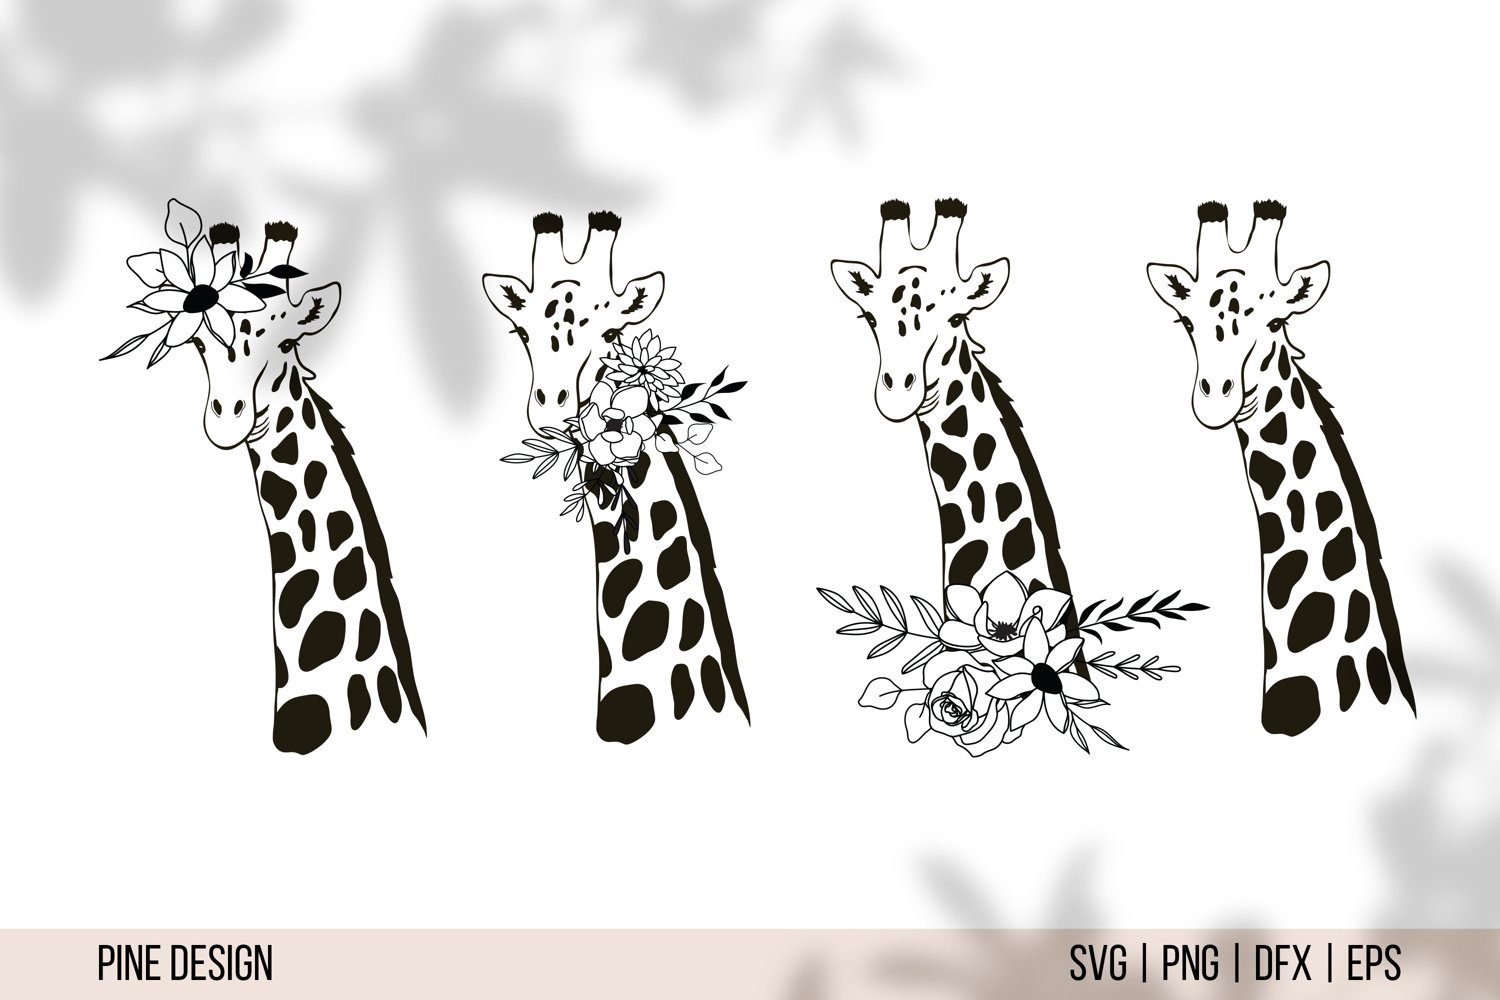 Three giraffes with flowers in their necks.